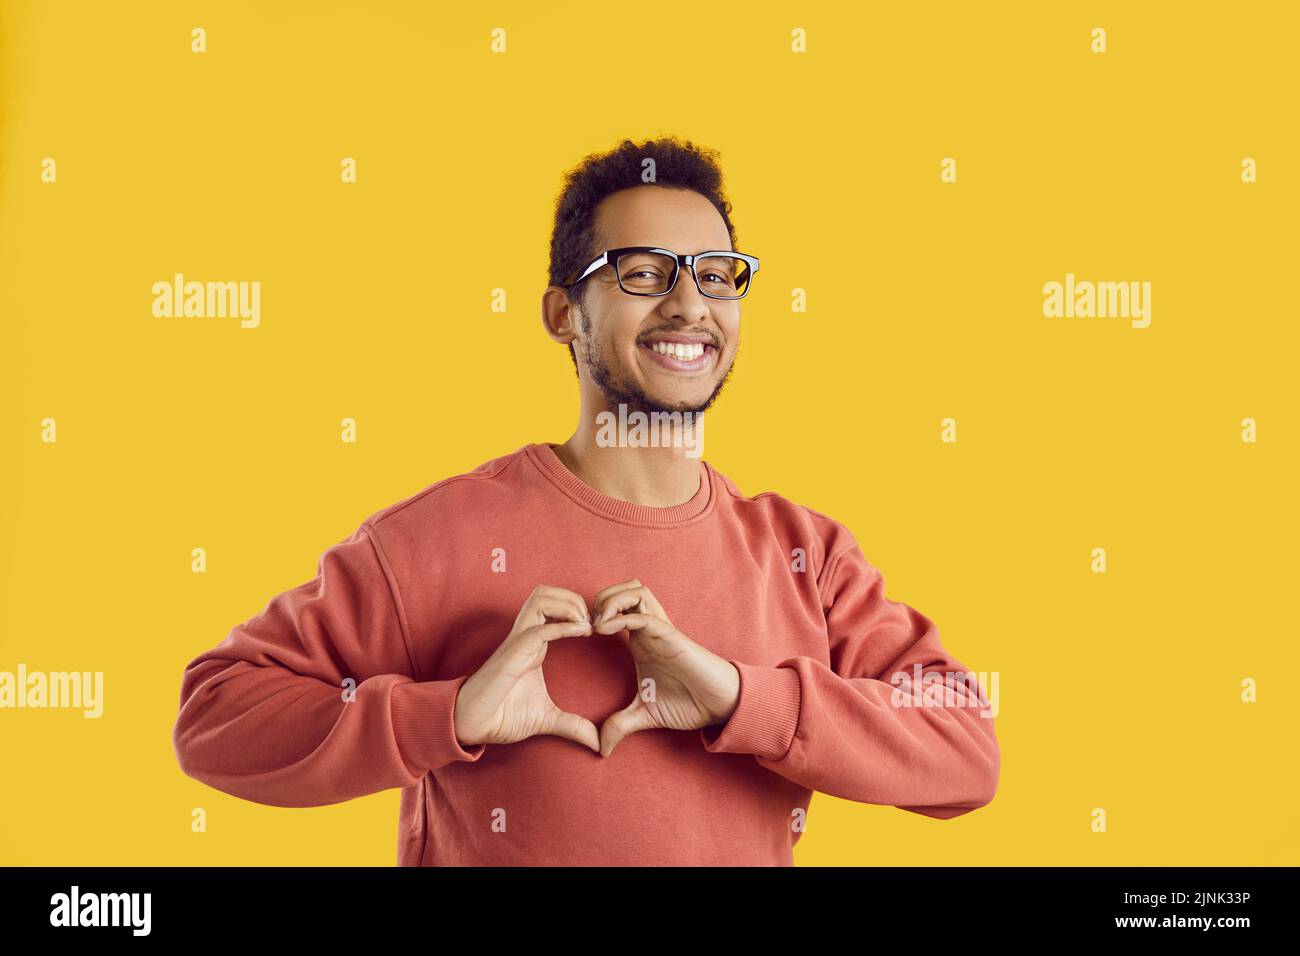 Portrait of smiling black man show heart hand gesture Stock Photo